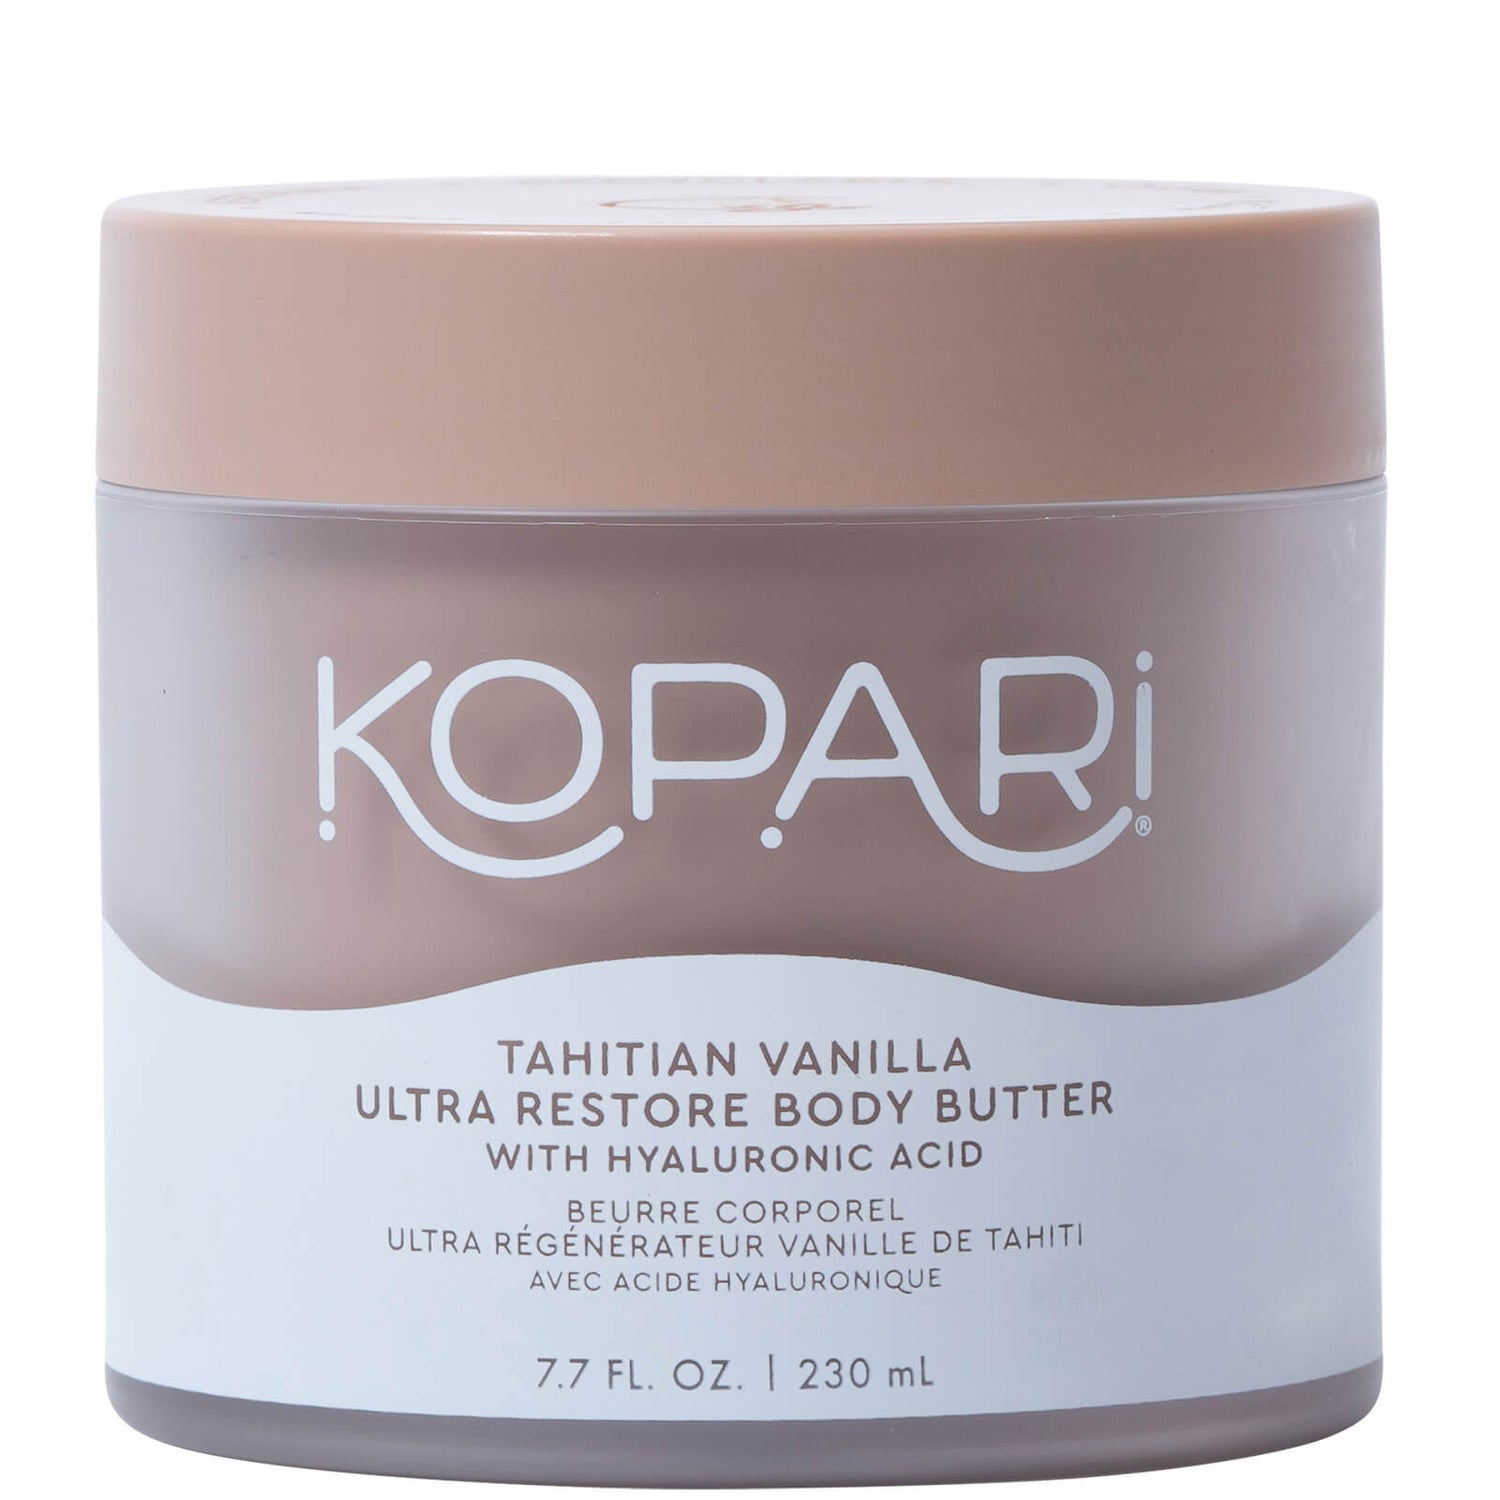 Kopari Beauty Tahitian Vanilla Ultra Restore Body Butter 230ml